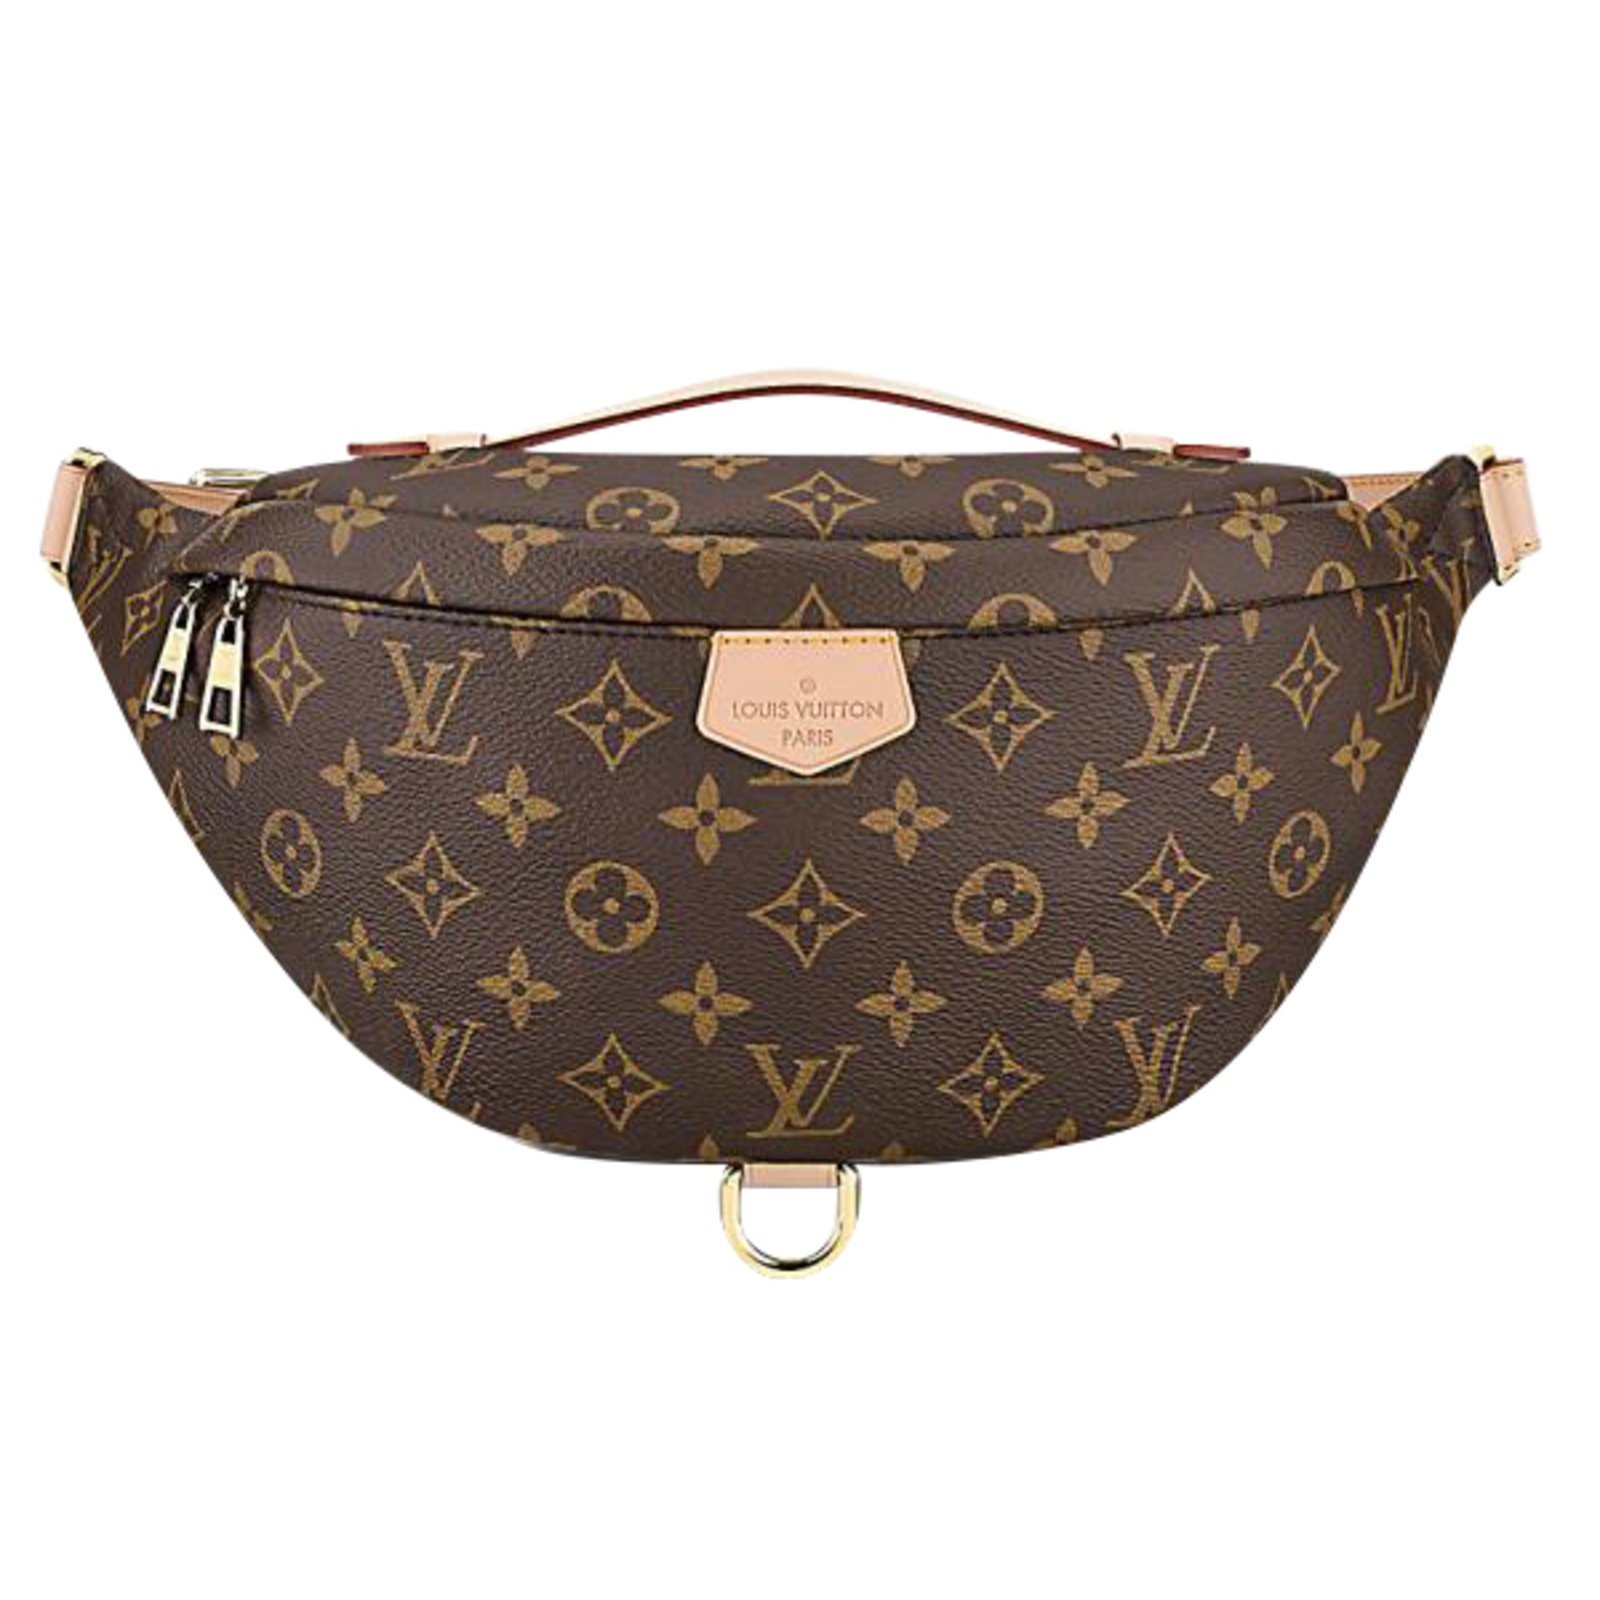 Bum bag / sac ceinture leather bag Louis Vuitton Brown in Leather - 36351131